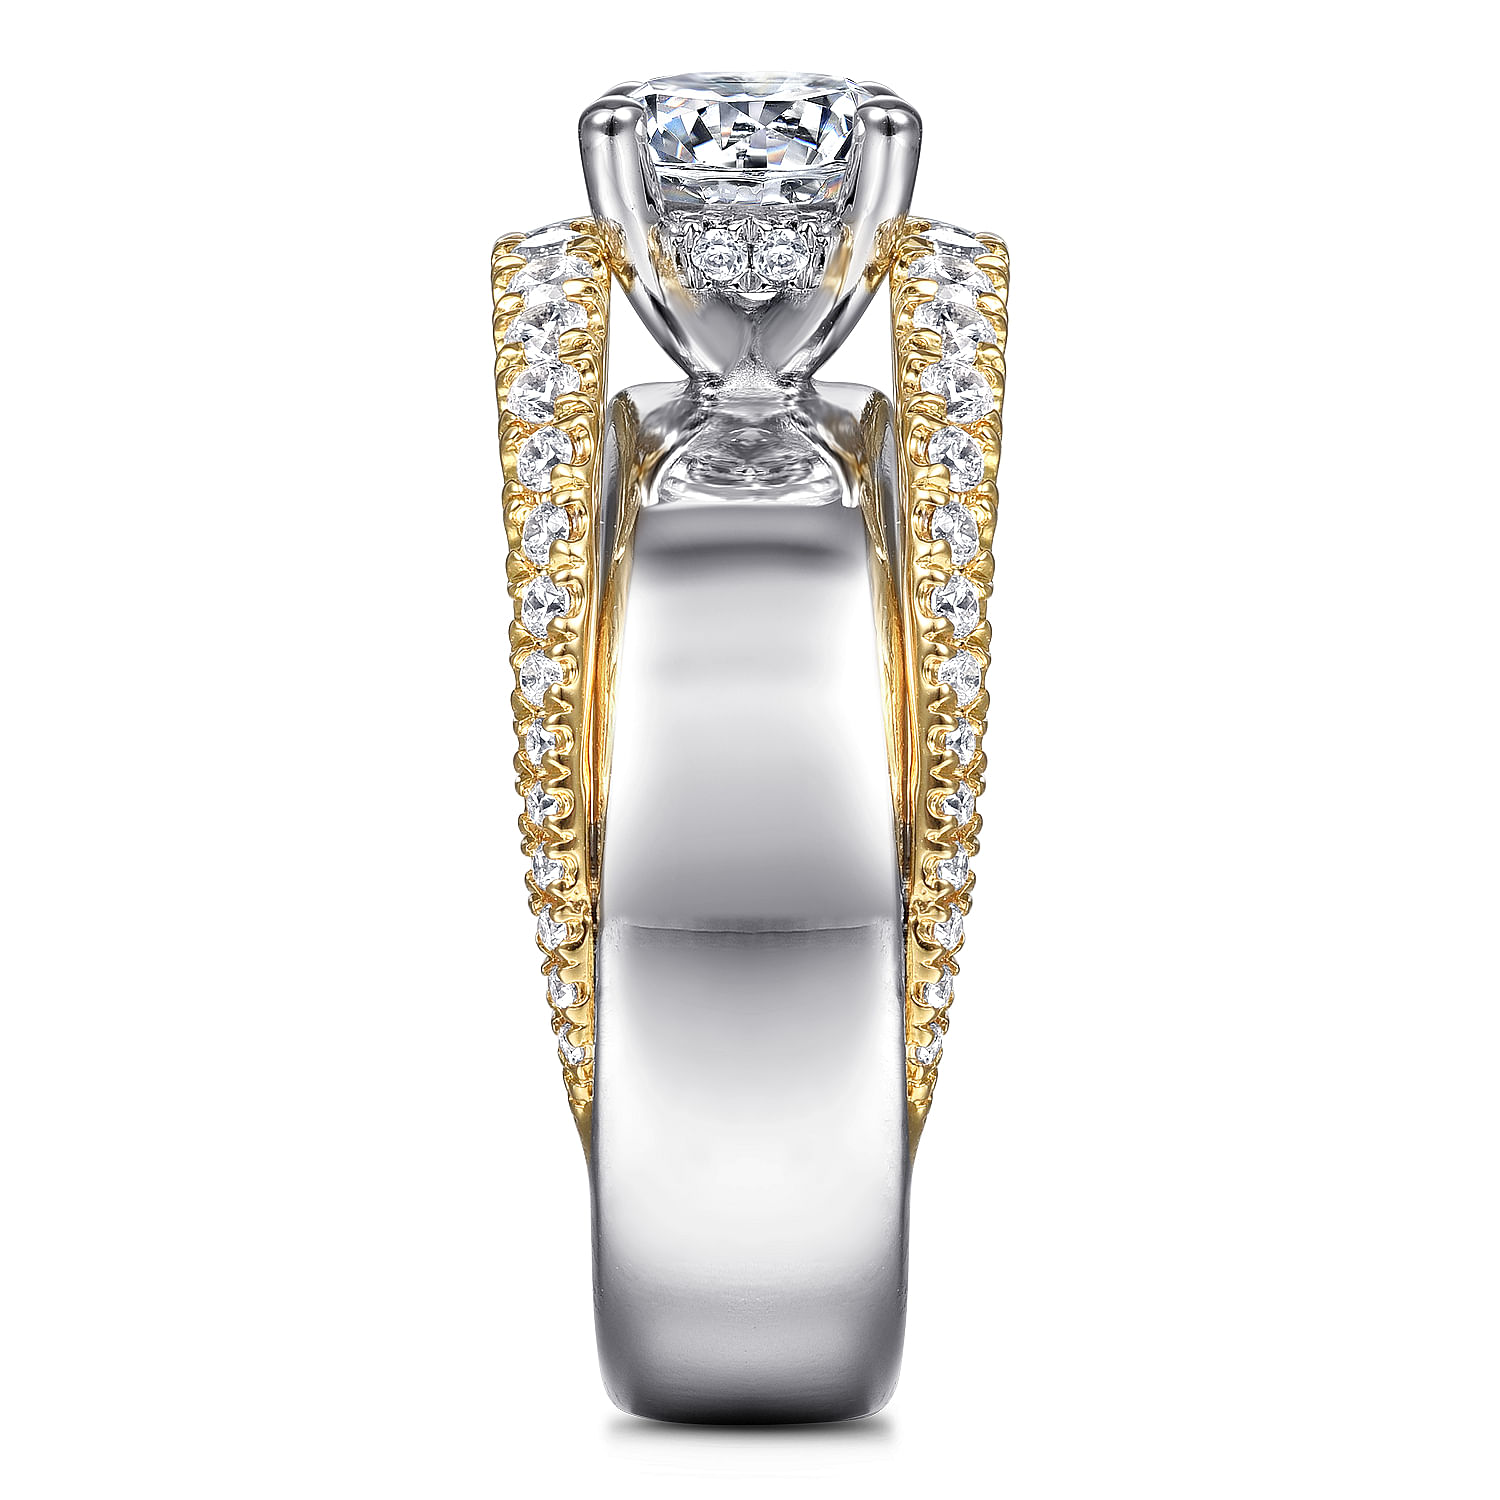 14K White-Yellow Gold Round Split Shank Diamond Engagement Ring